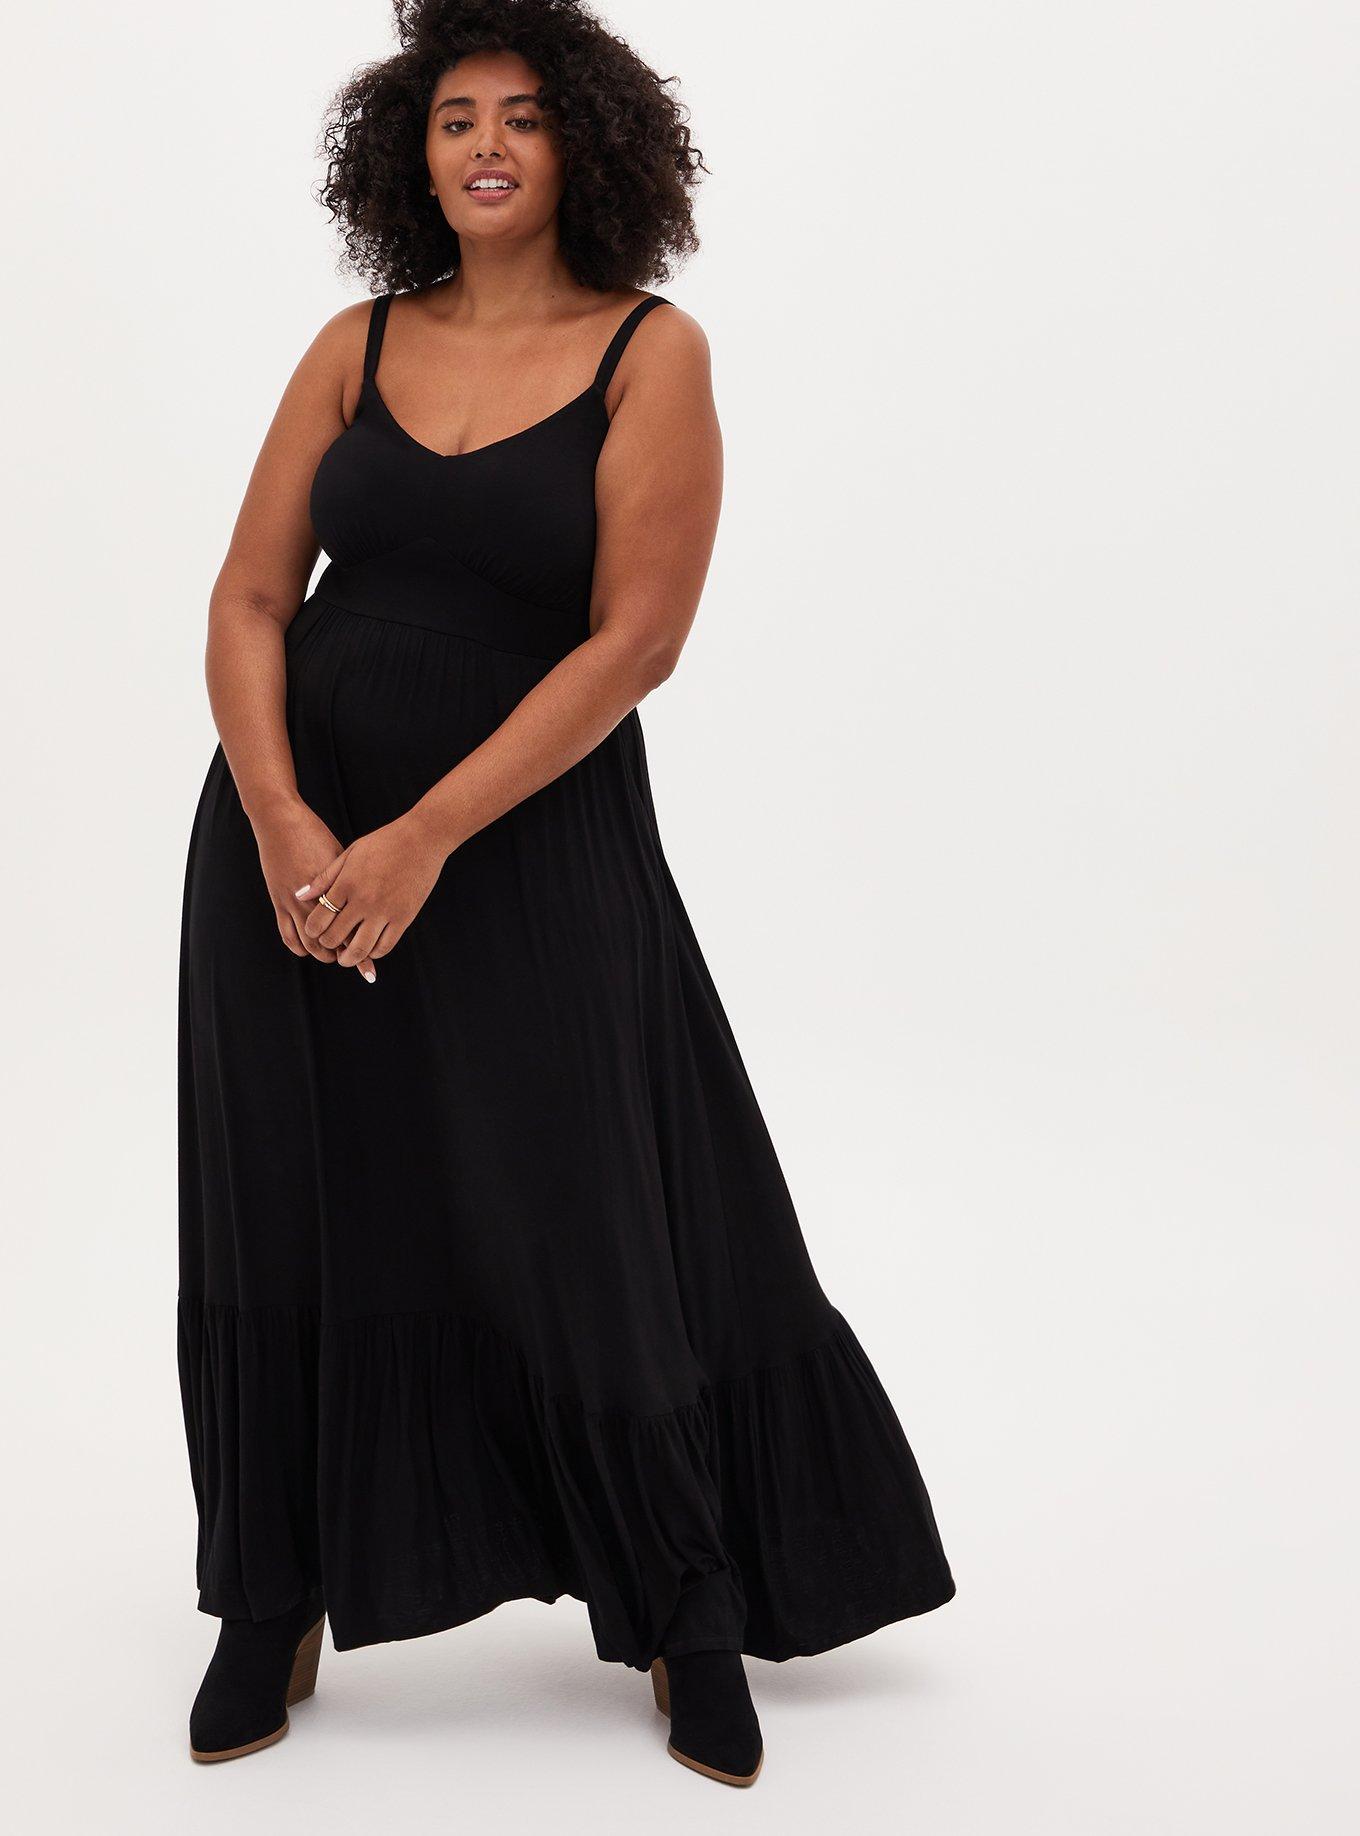 New Womens PLUS SIZE SOLID BLACK JERSEY BOHO MAXI DRESS POCKETS XL 1X 2X 3X  USA